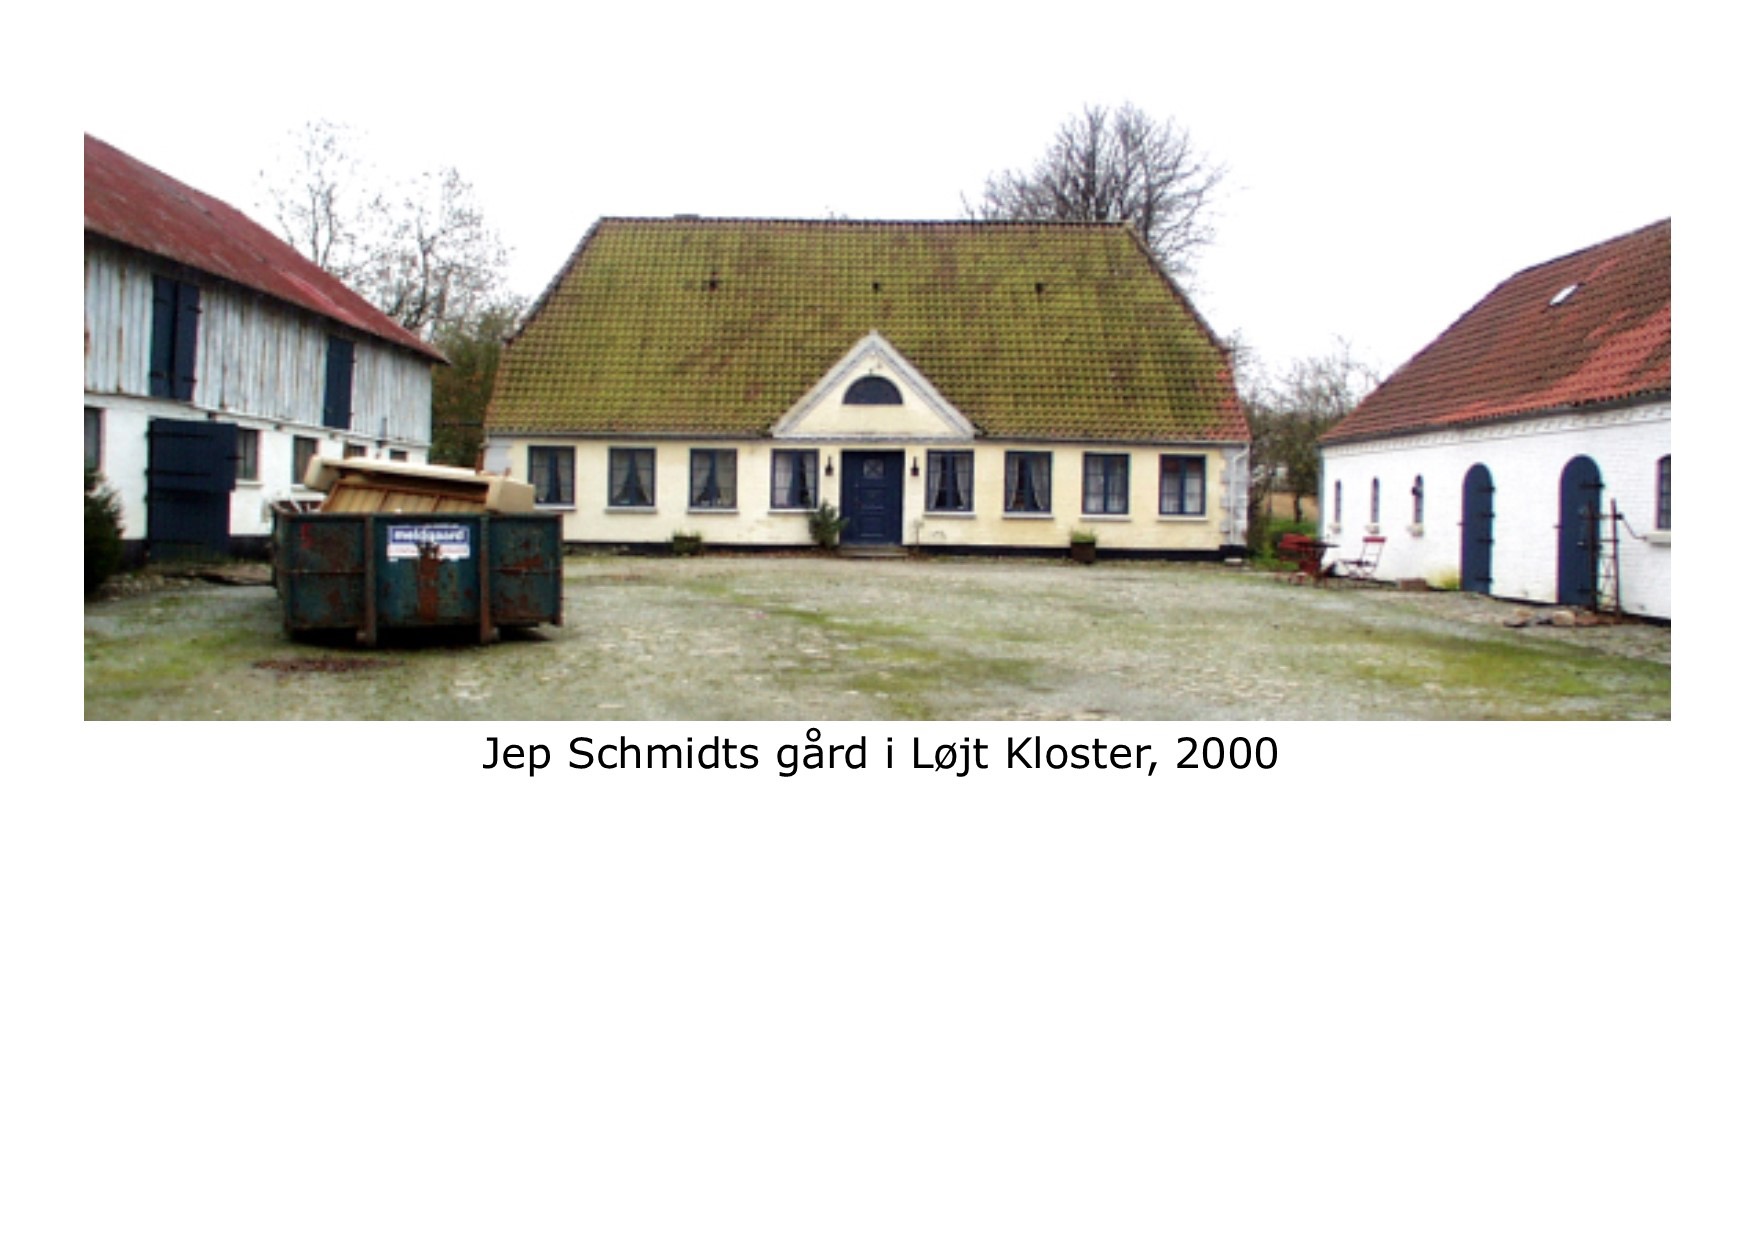 Jep Schmidts gård i Løjt Kloster 2000 